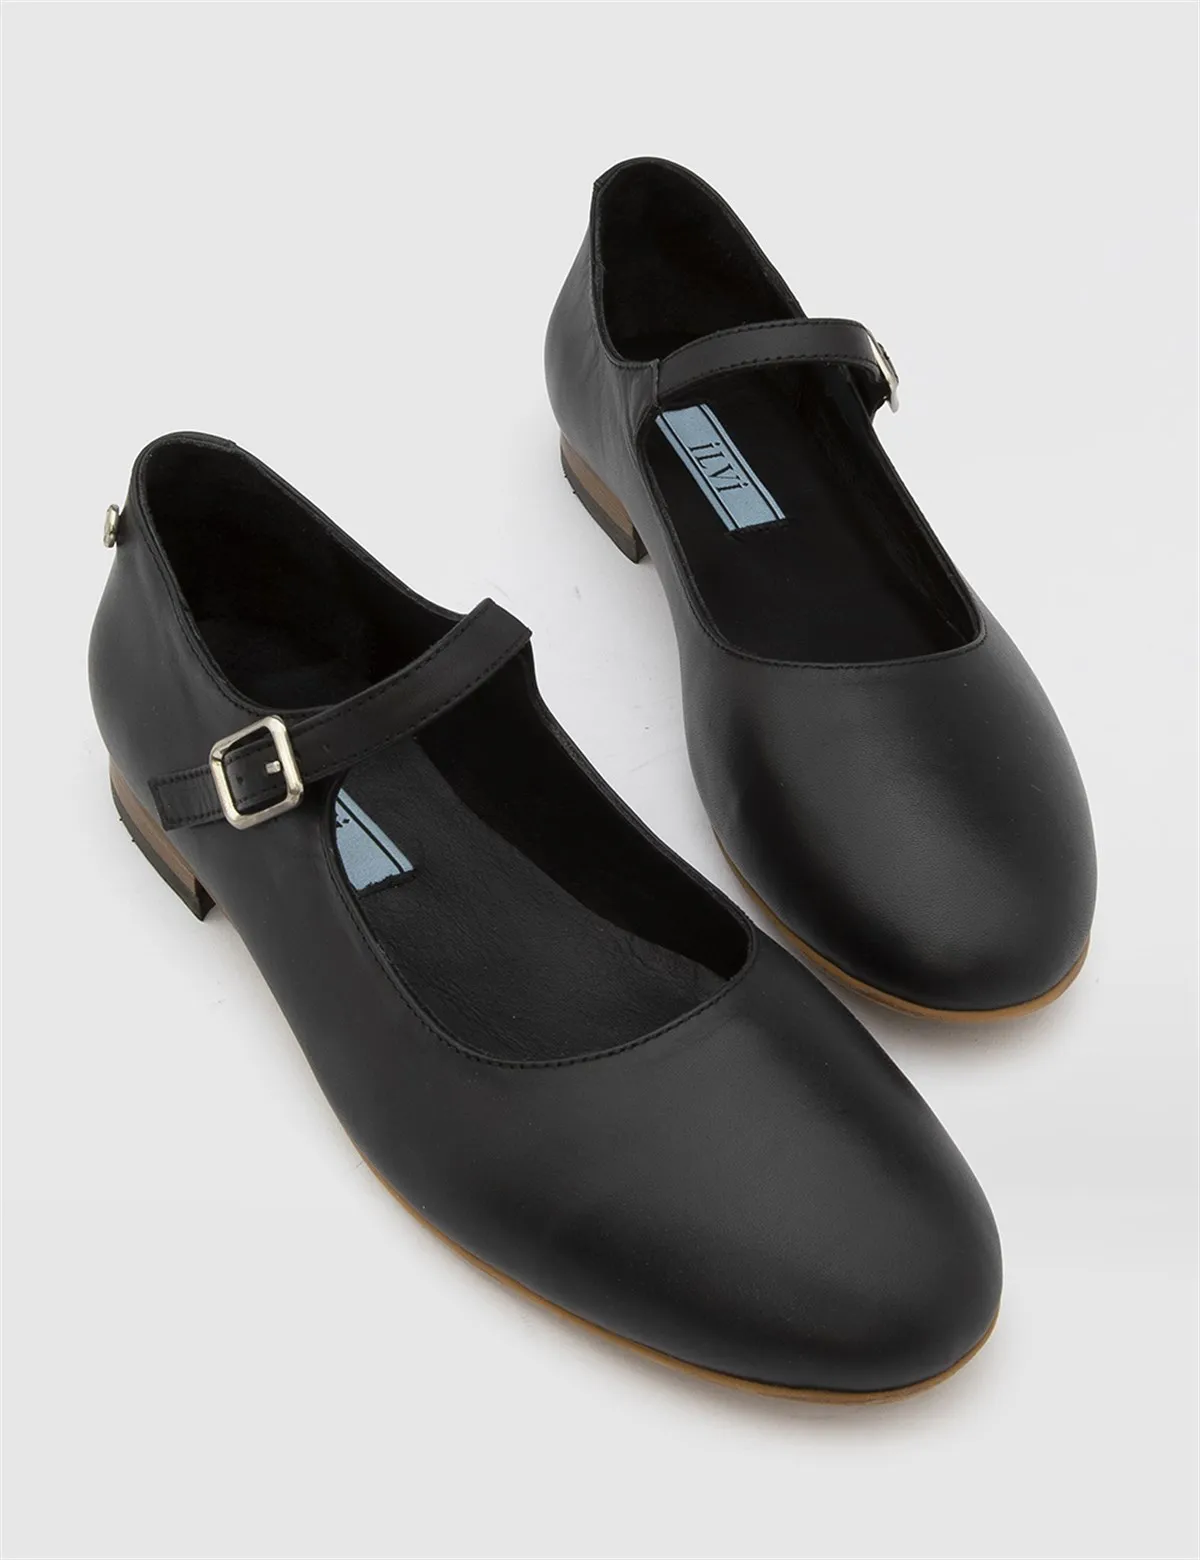 

ILVi-Genuine Leather Handmade Kela Black Leather Ballerina Women Shoes 2022 Fall/Winter